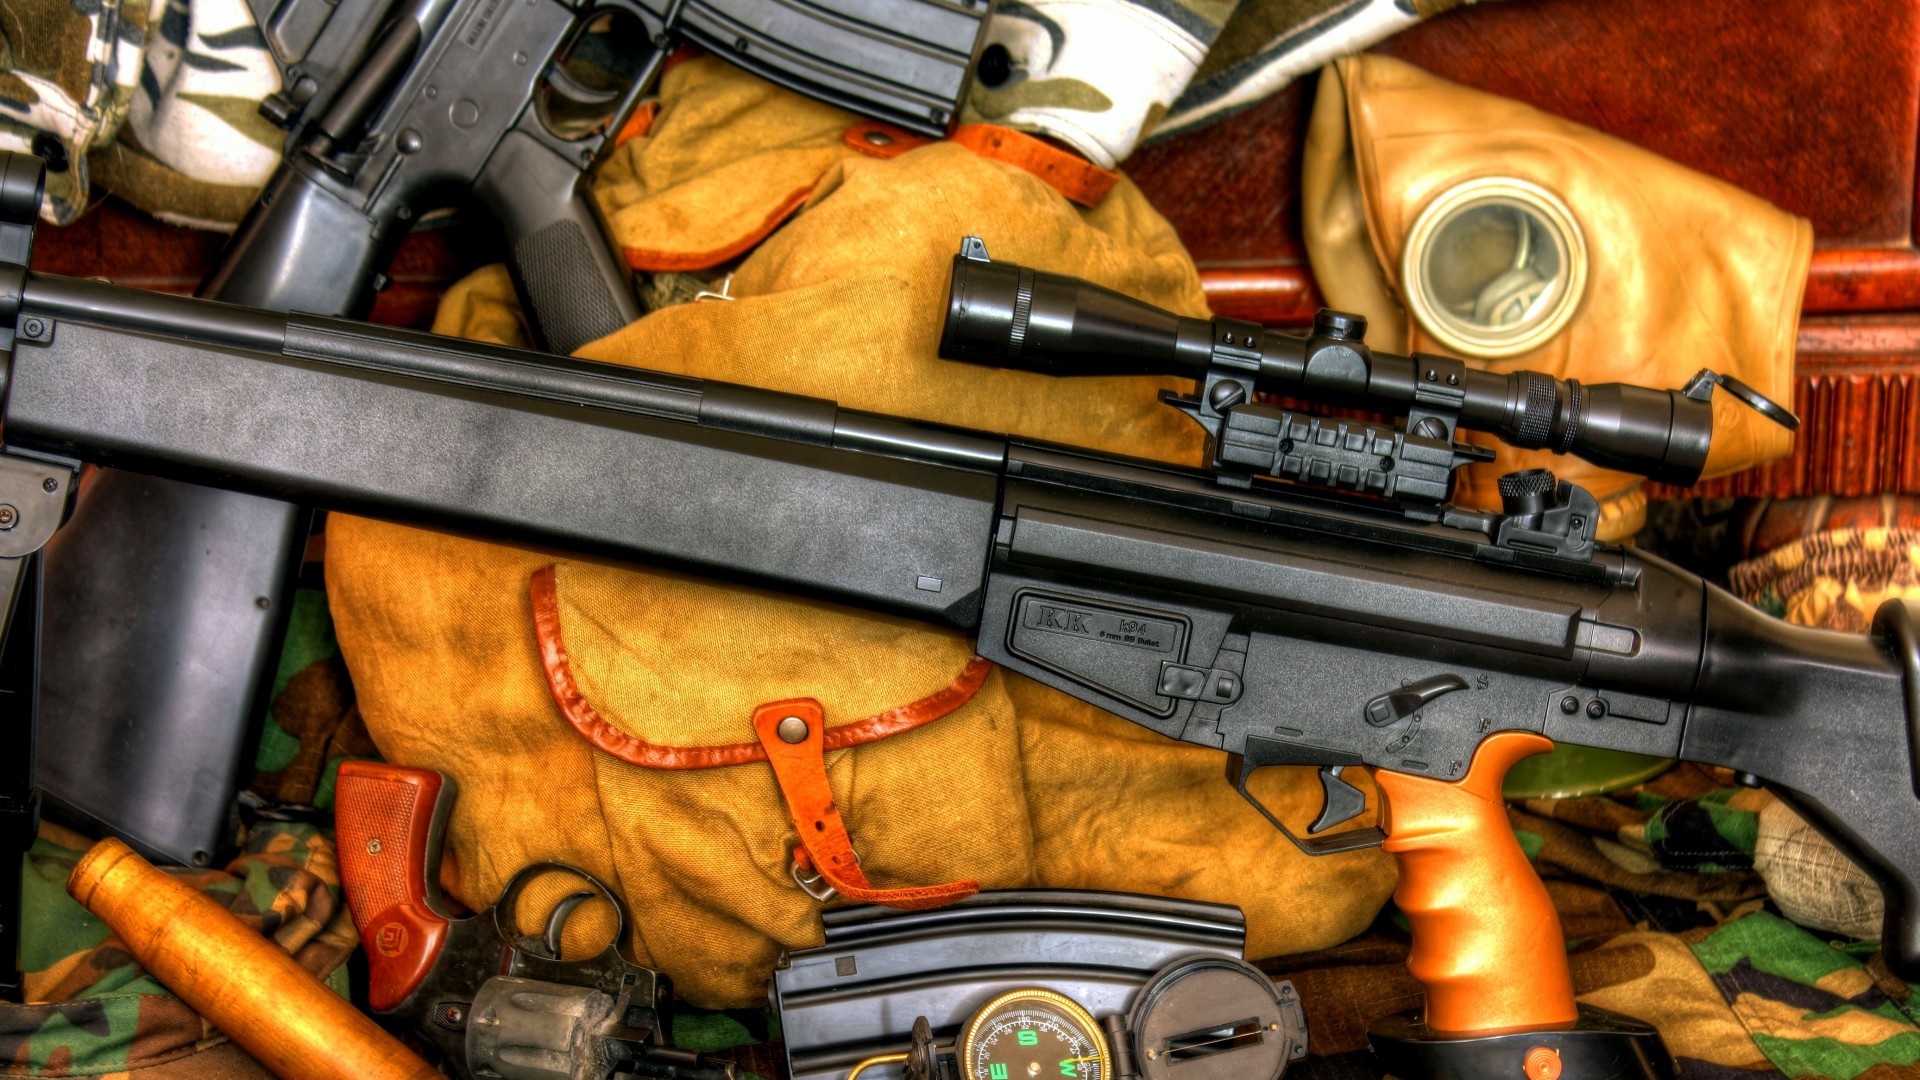 снайперская винтовка, аммуниция, револьвер, K 94, sniper rifle, m16a1, compass, FPS-200, scope, ammunition, bullets (horizontal)